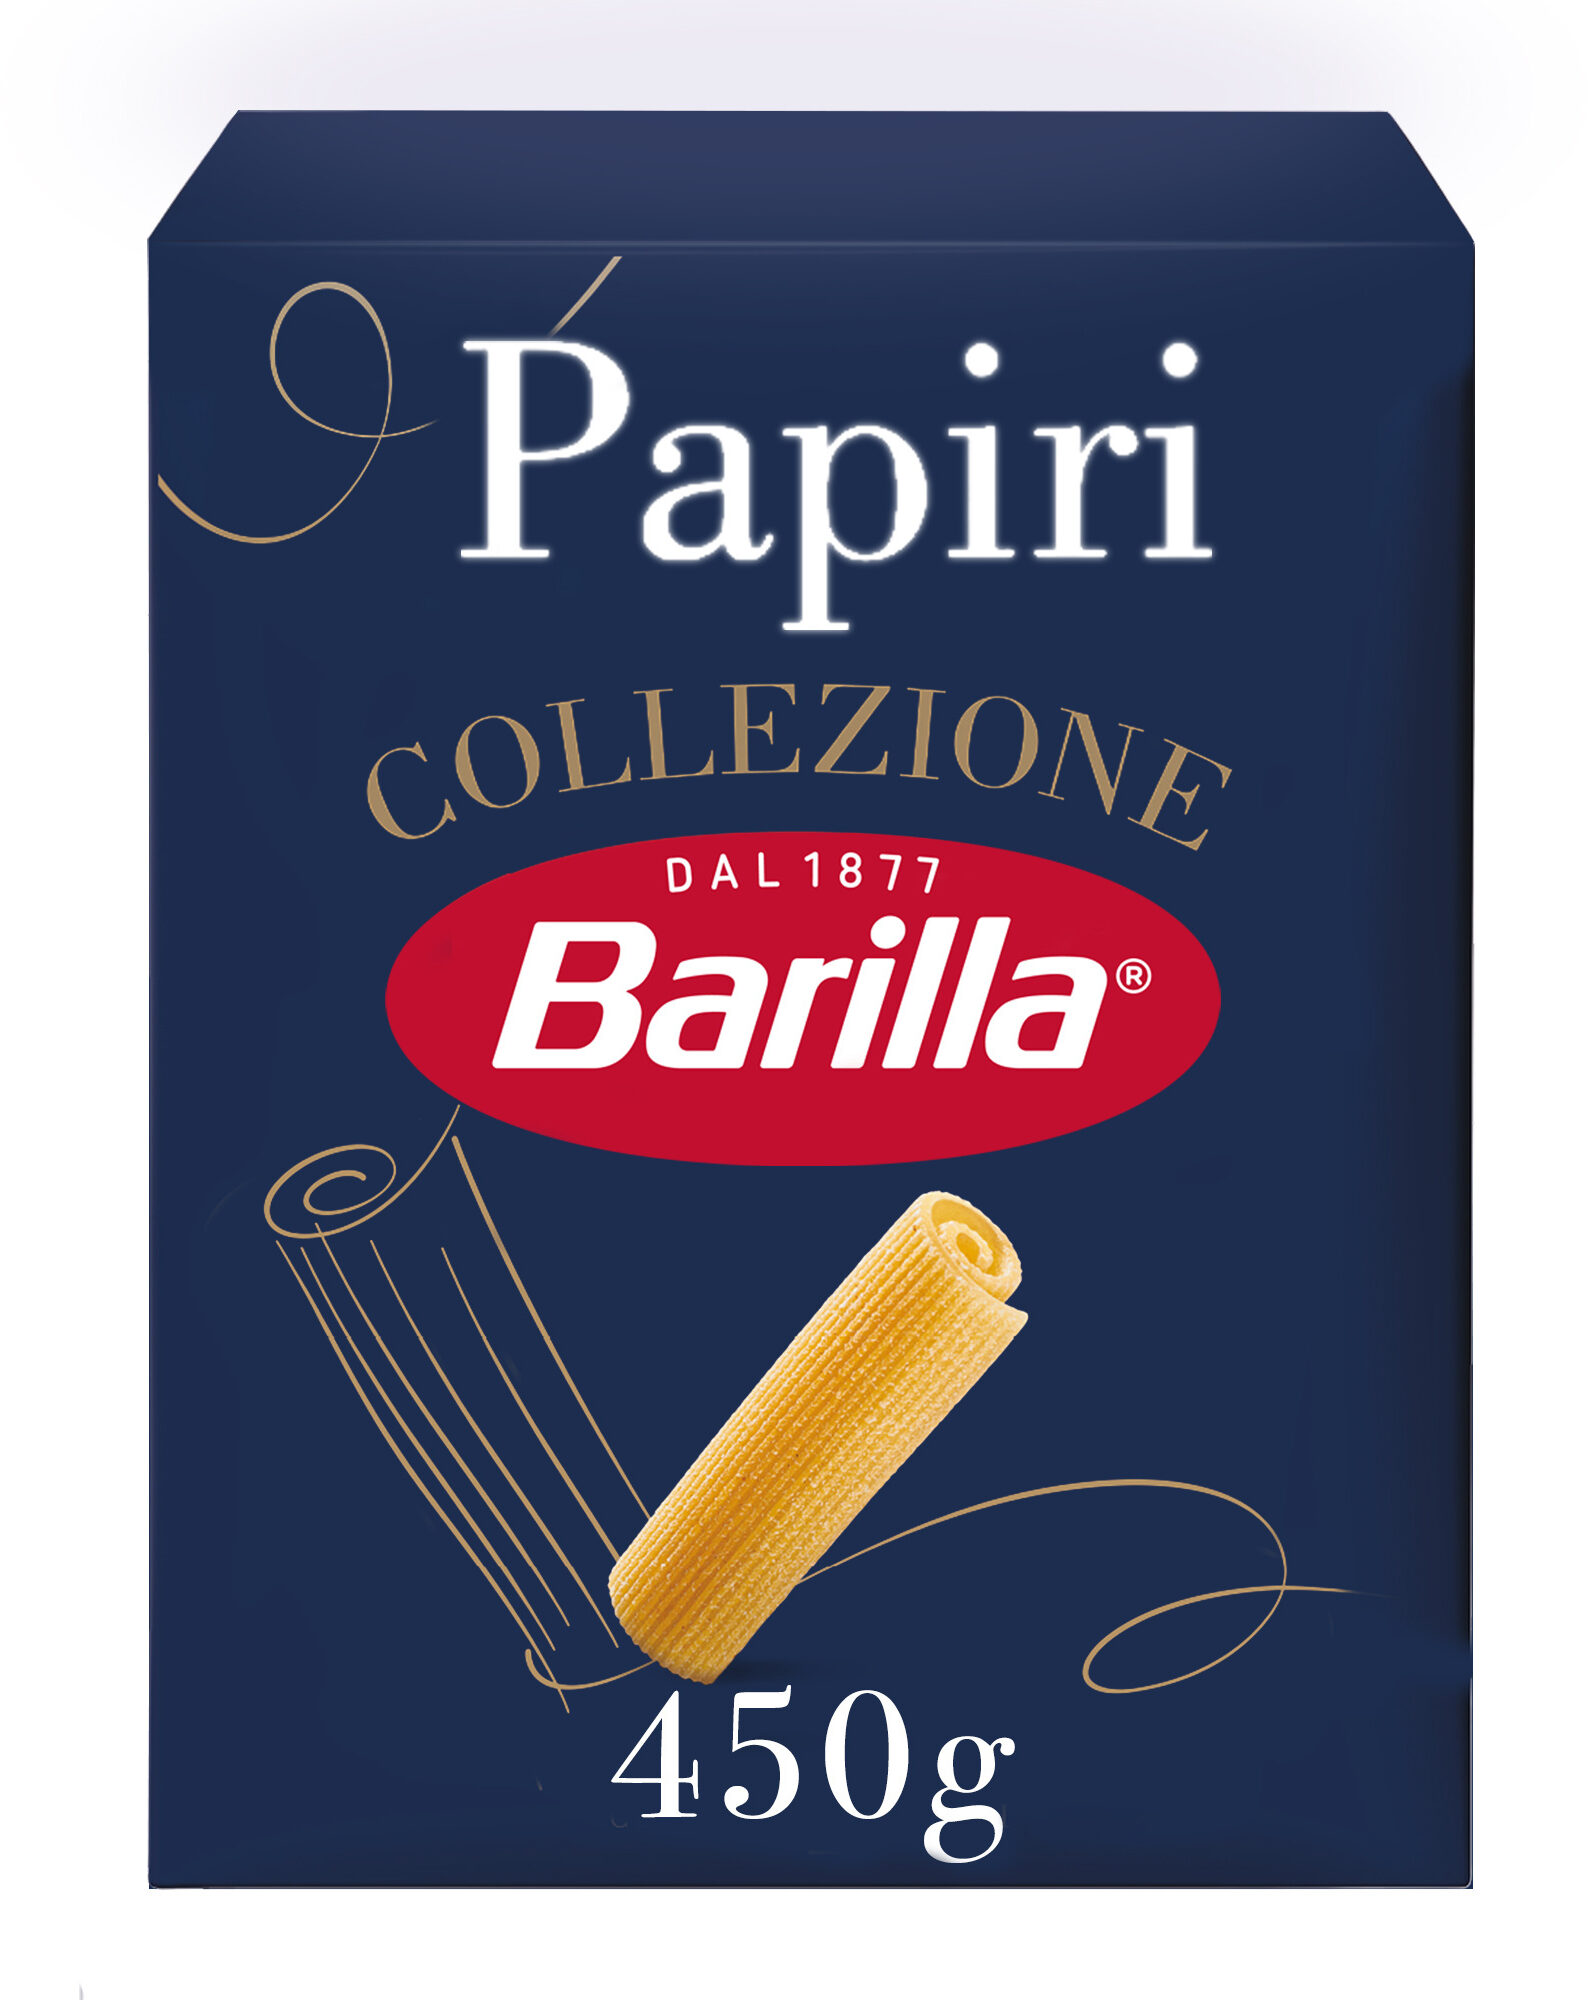 Barilla pates collezione papiri 450g - Produkt - fr